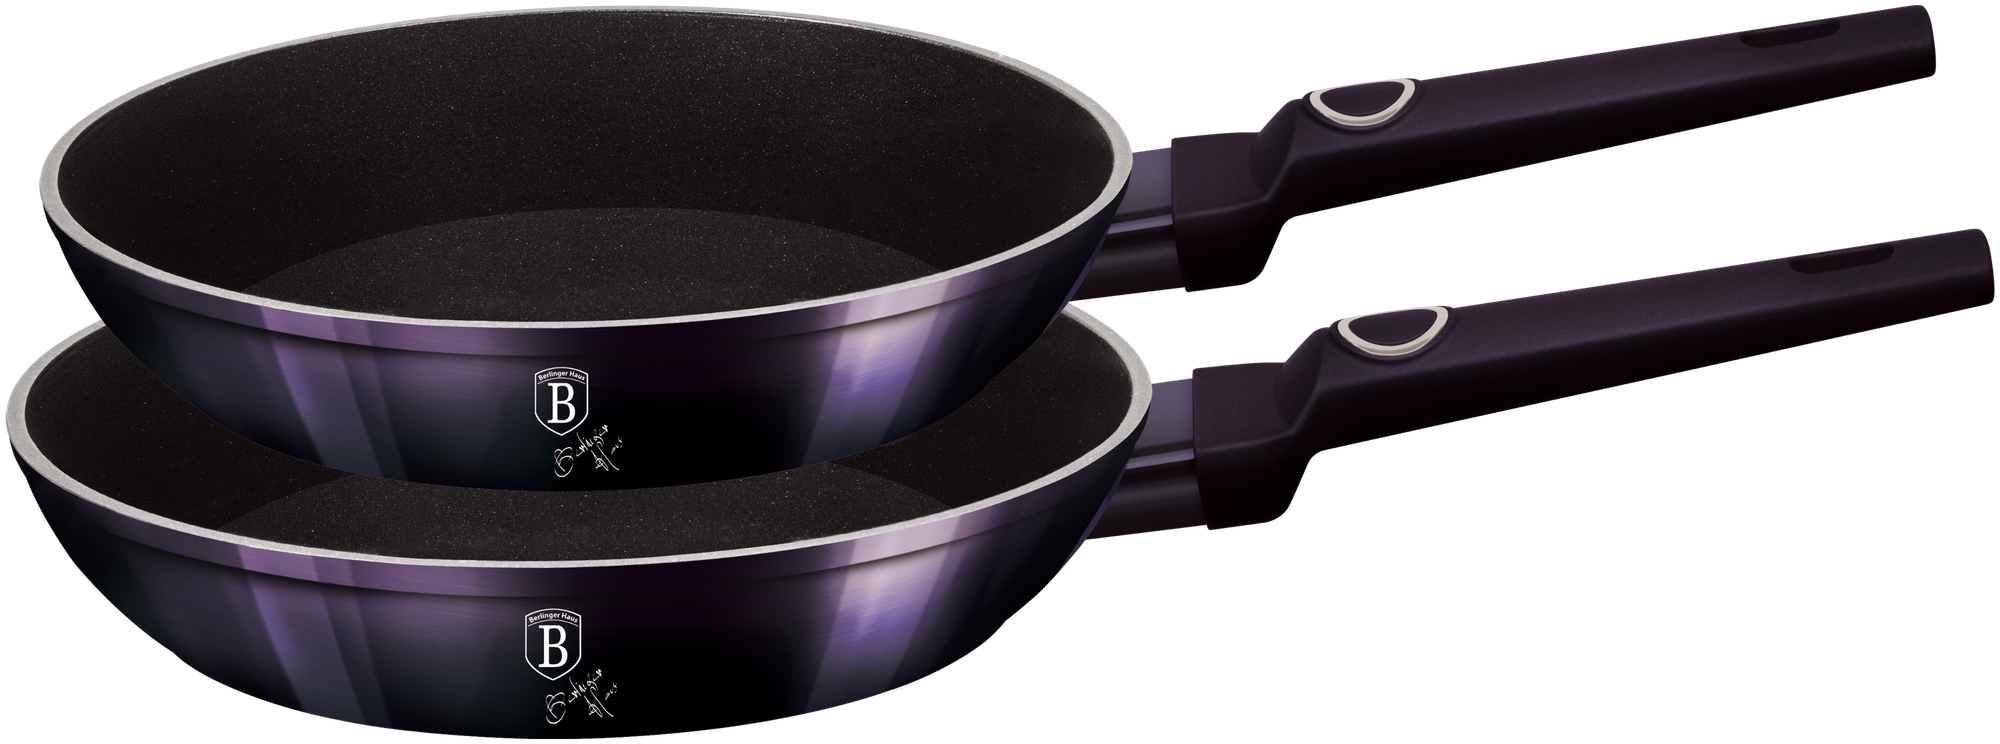 Набор сковородок 2пр. BH-6789 Purple Eclips Collection